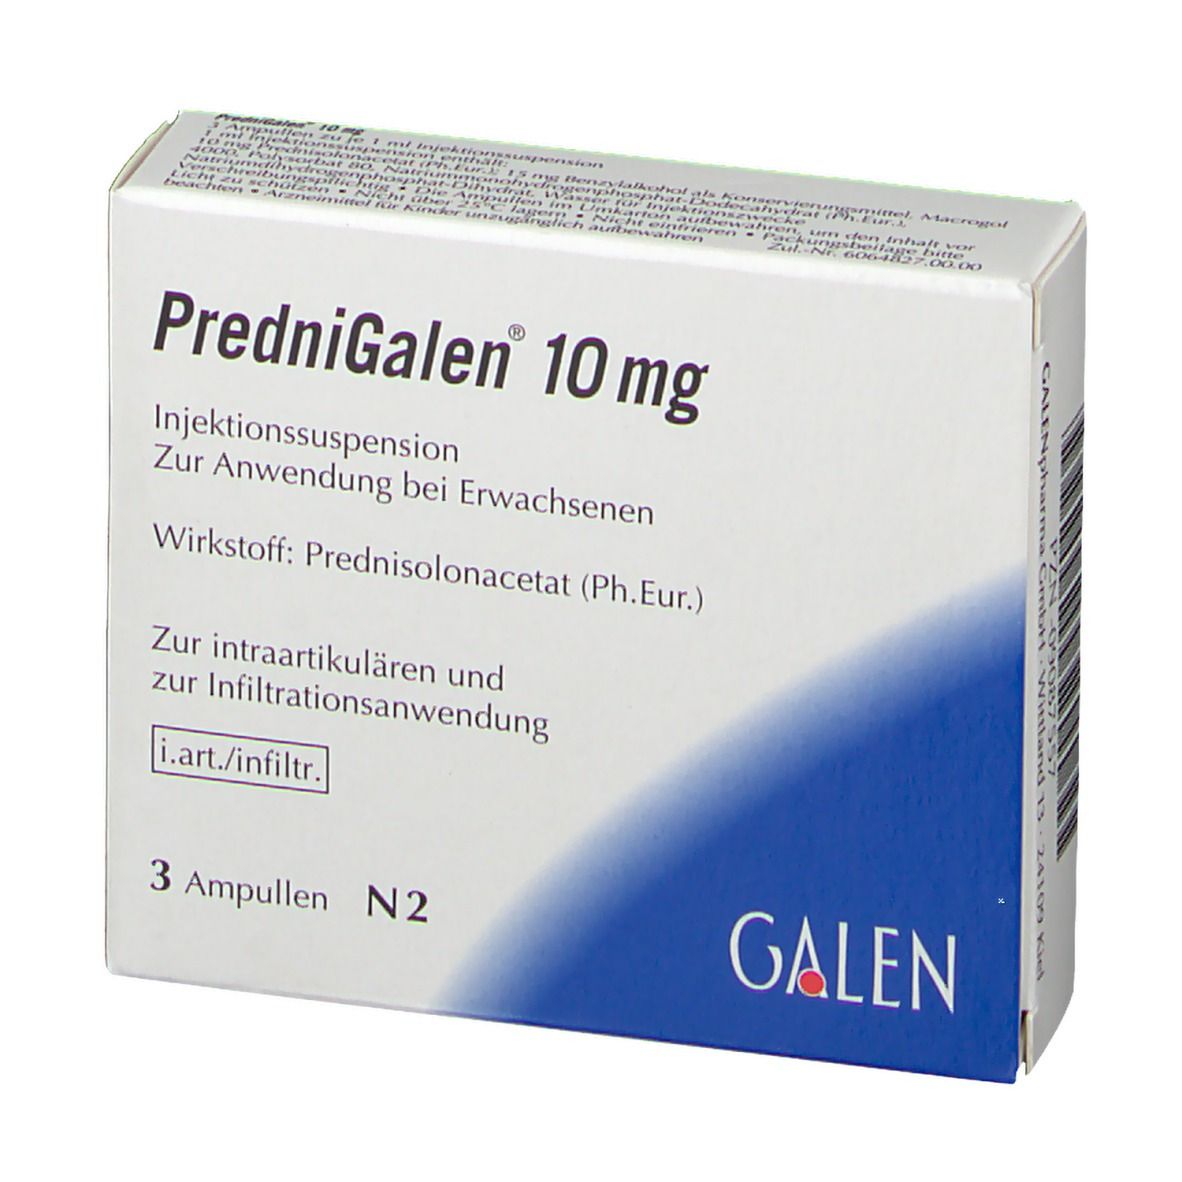 PredniGalen® 10 mg